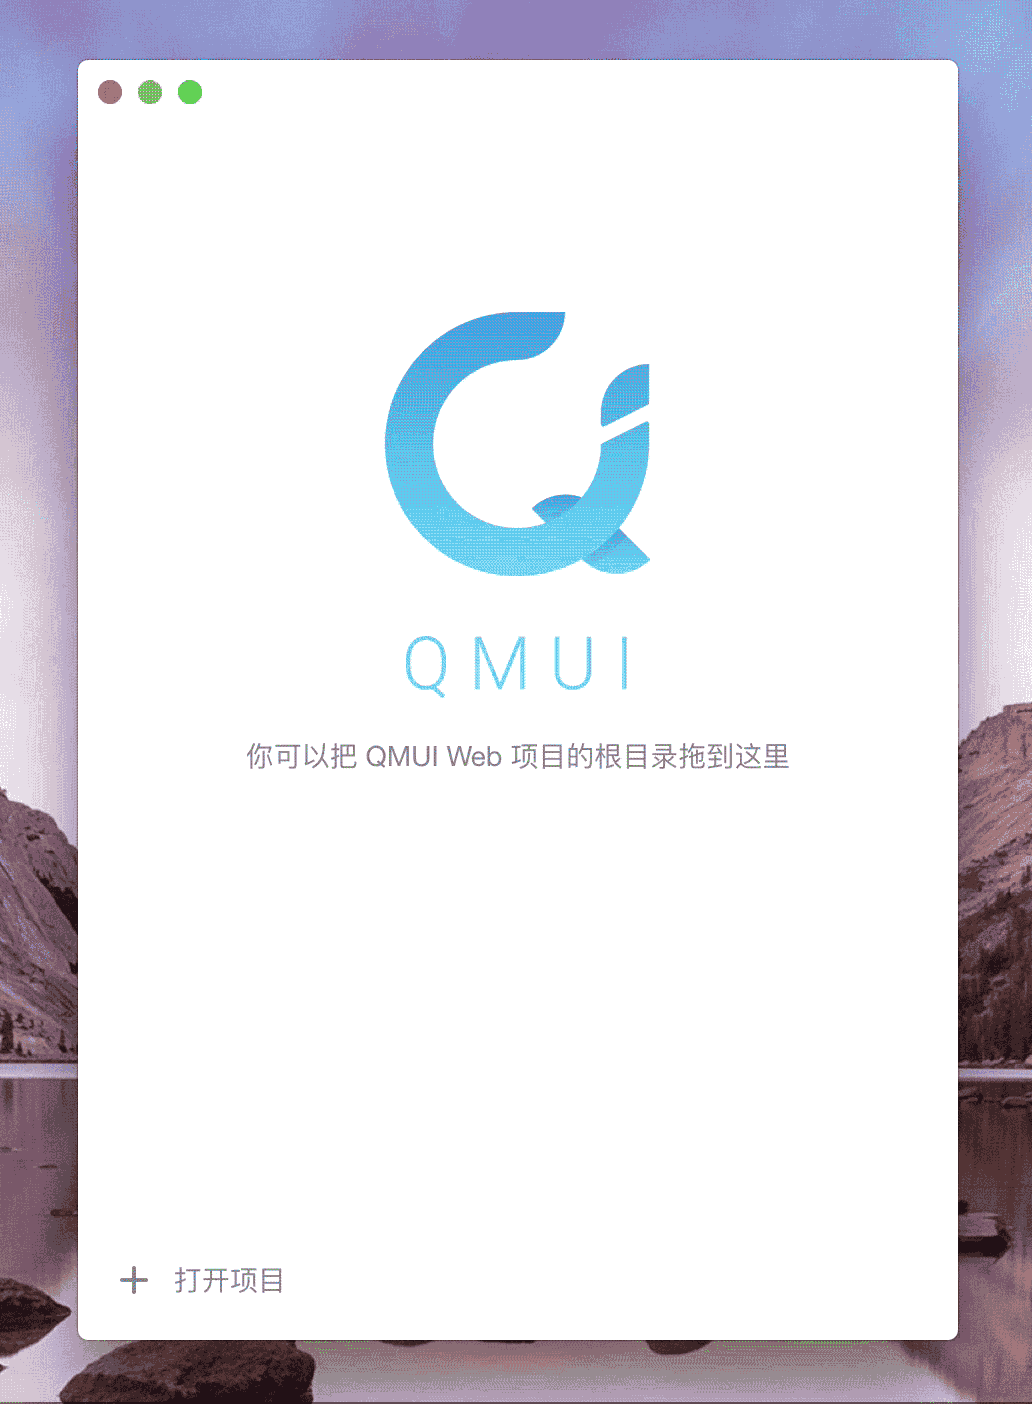 QMUI Web Desktop 效果图